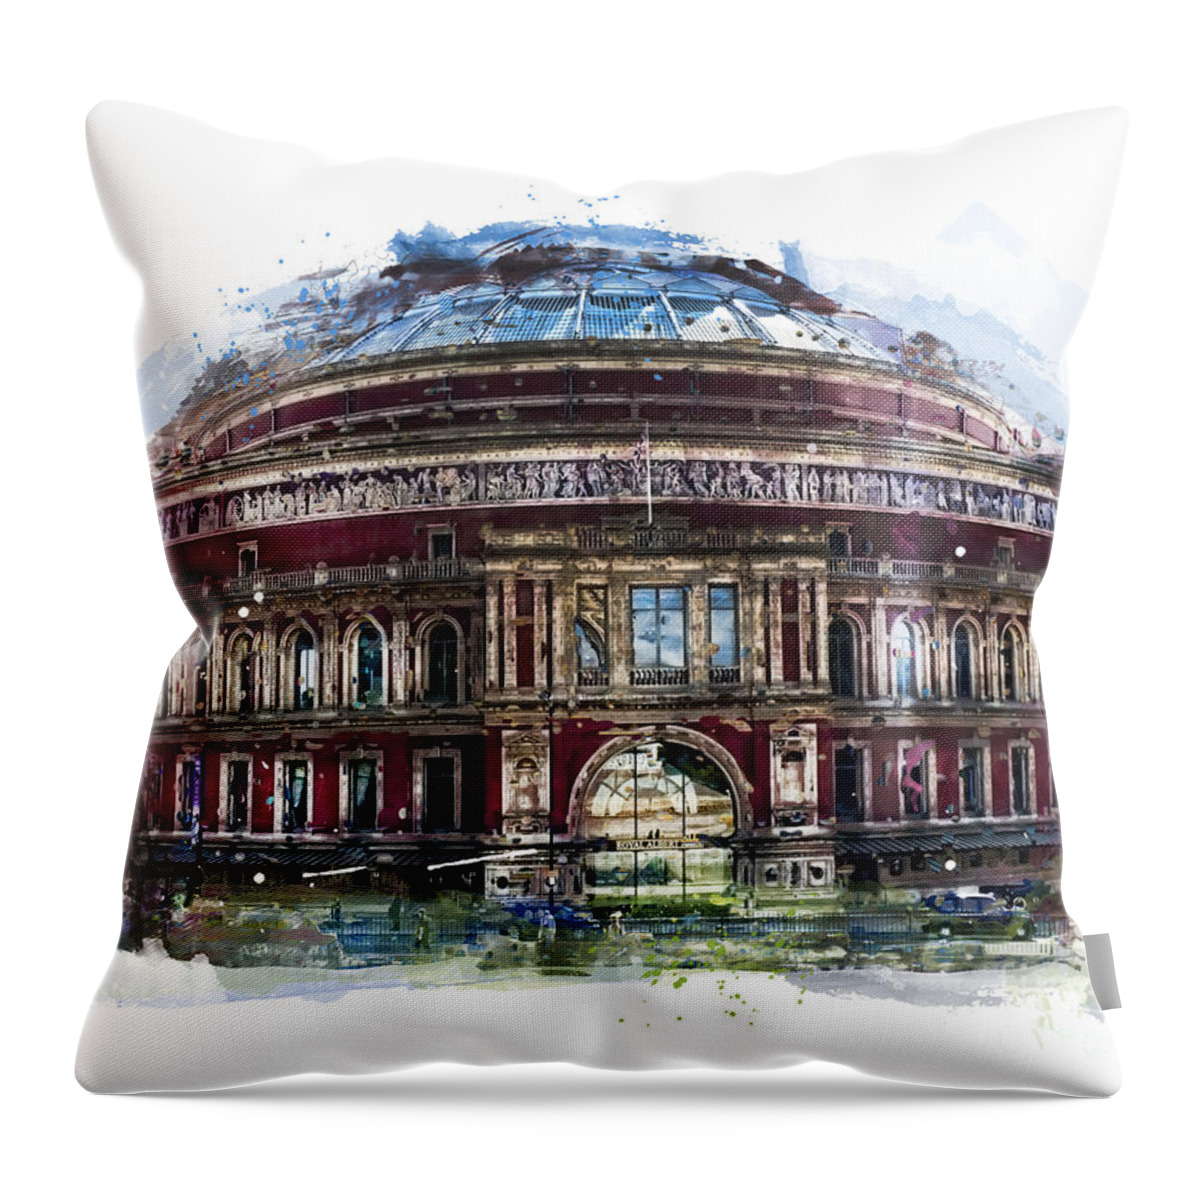 Royal Albert Hall Throw Pillow featuring the painting Royal Albert Hall - London by Justyna Jaszke JBJart